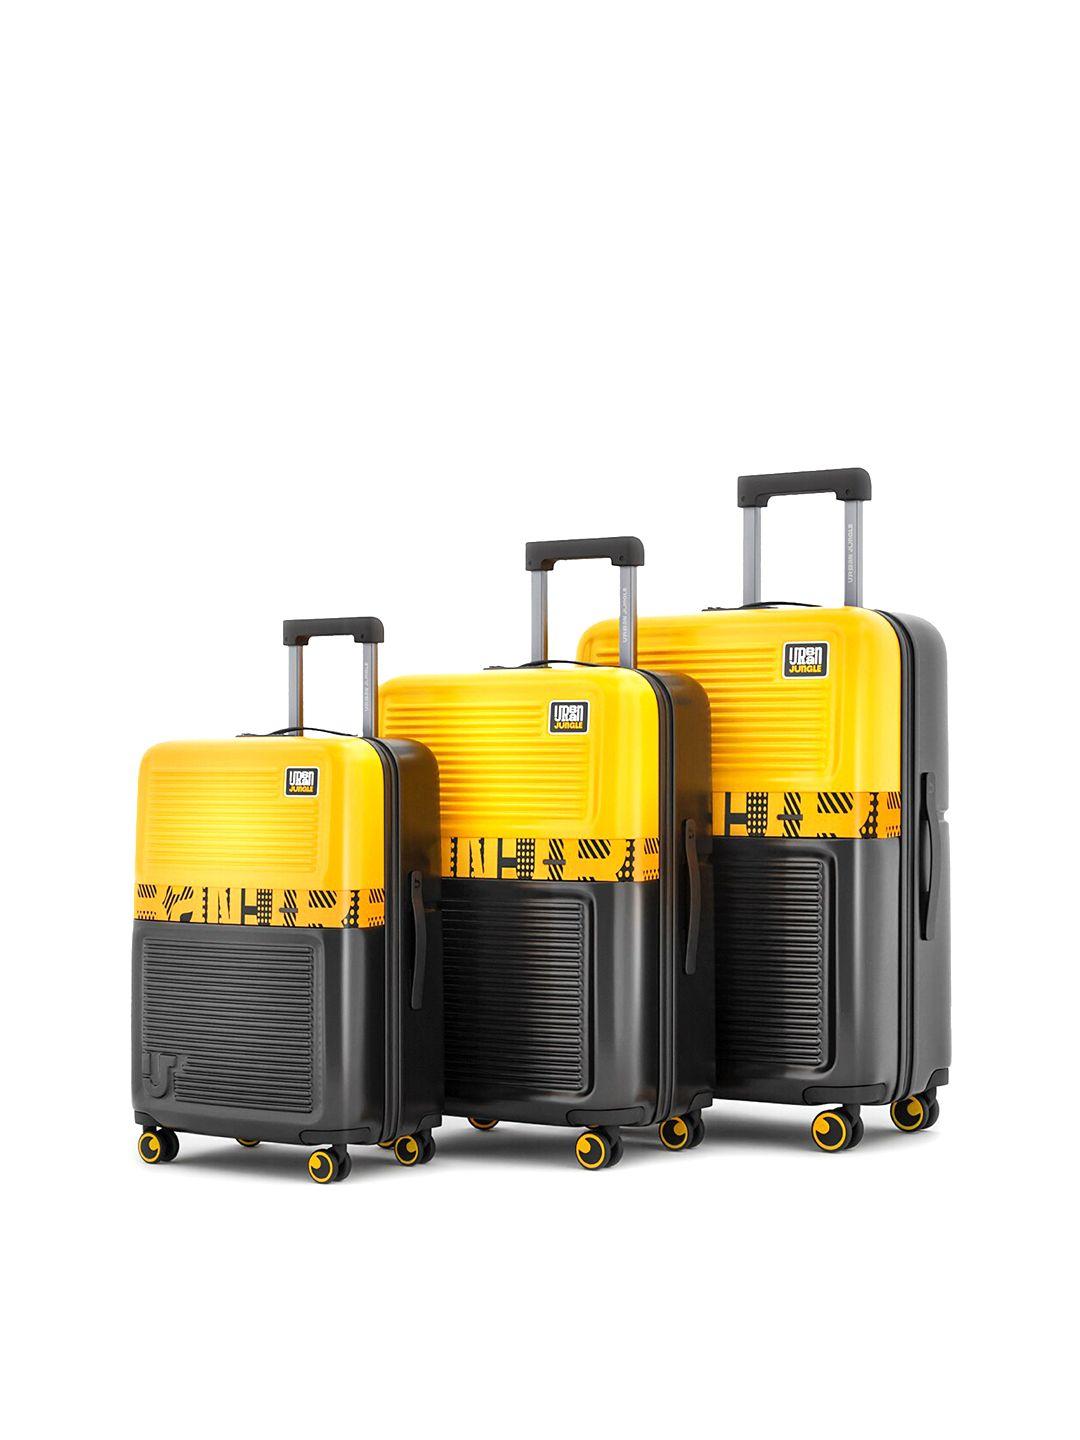 urban jungle set of 3 yellow & grey hard luggage trolley